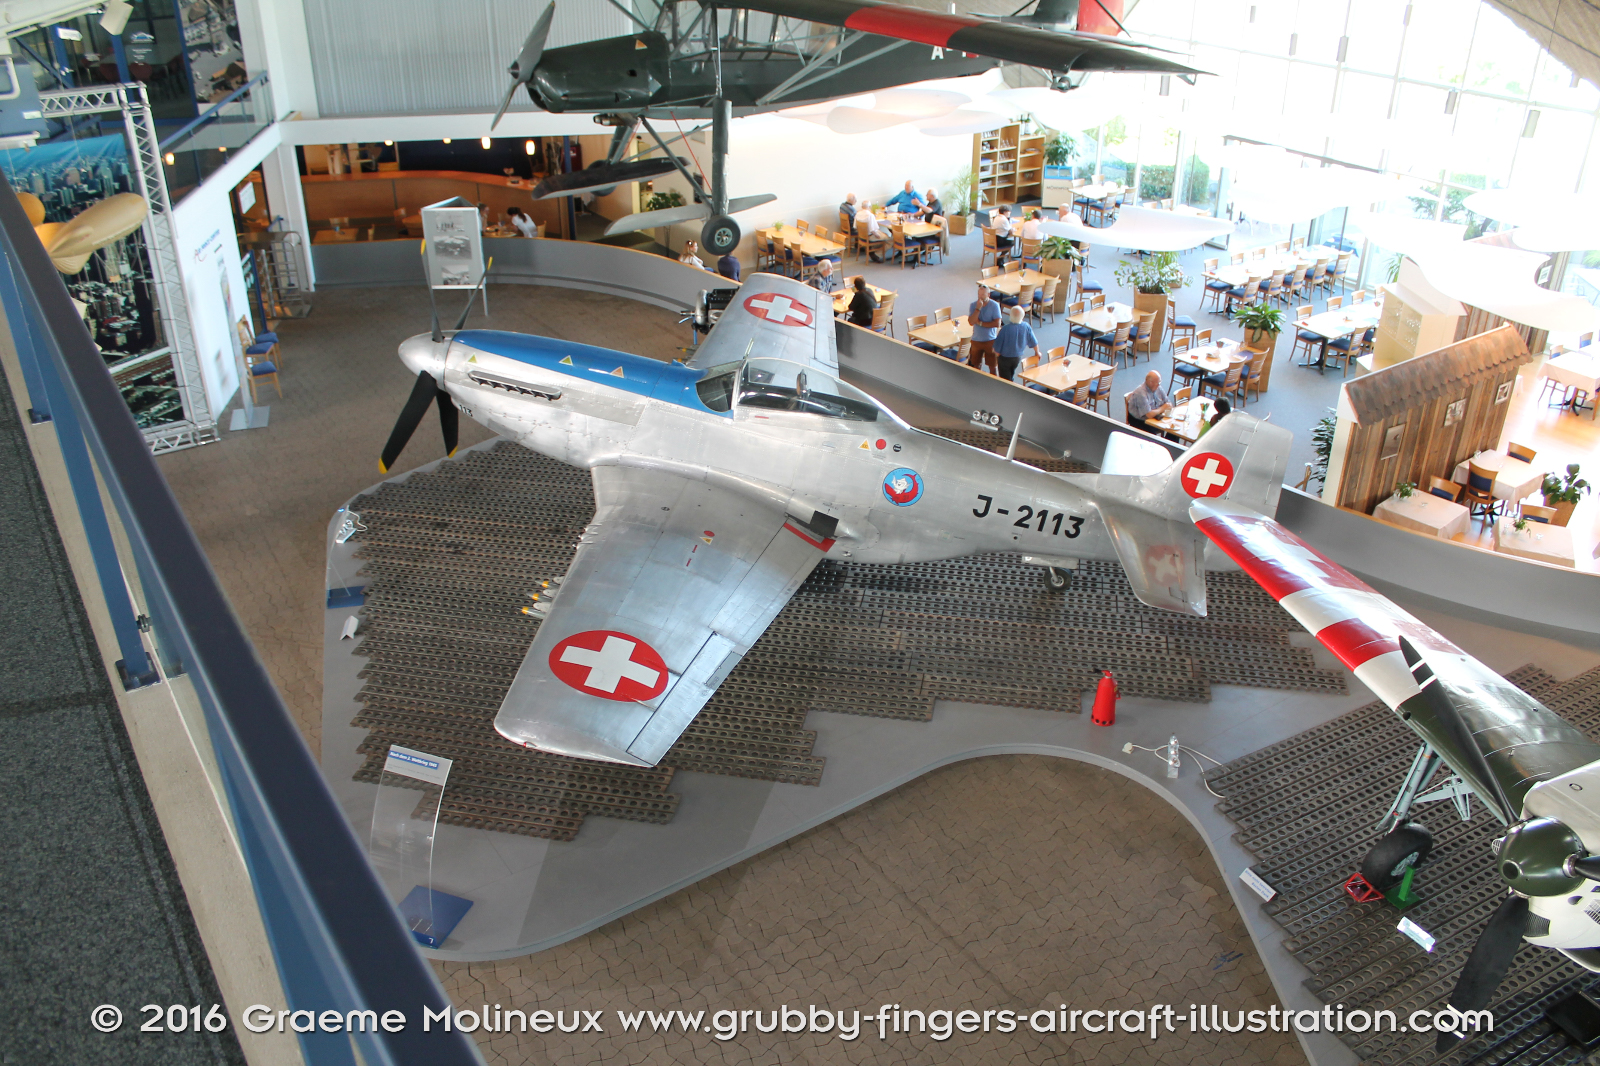 NORTH_AMERICAN_P-51D_Mustang_Walkaround_J-2113_Swiss_Air_Force_Museum_2015_02_GrubbyFingers